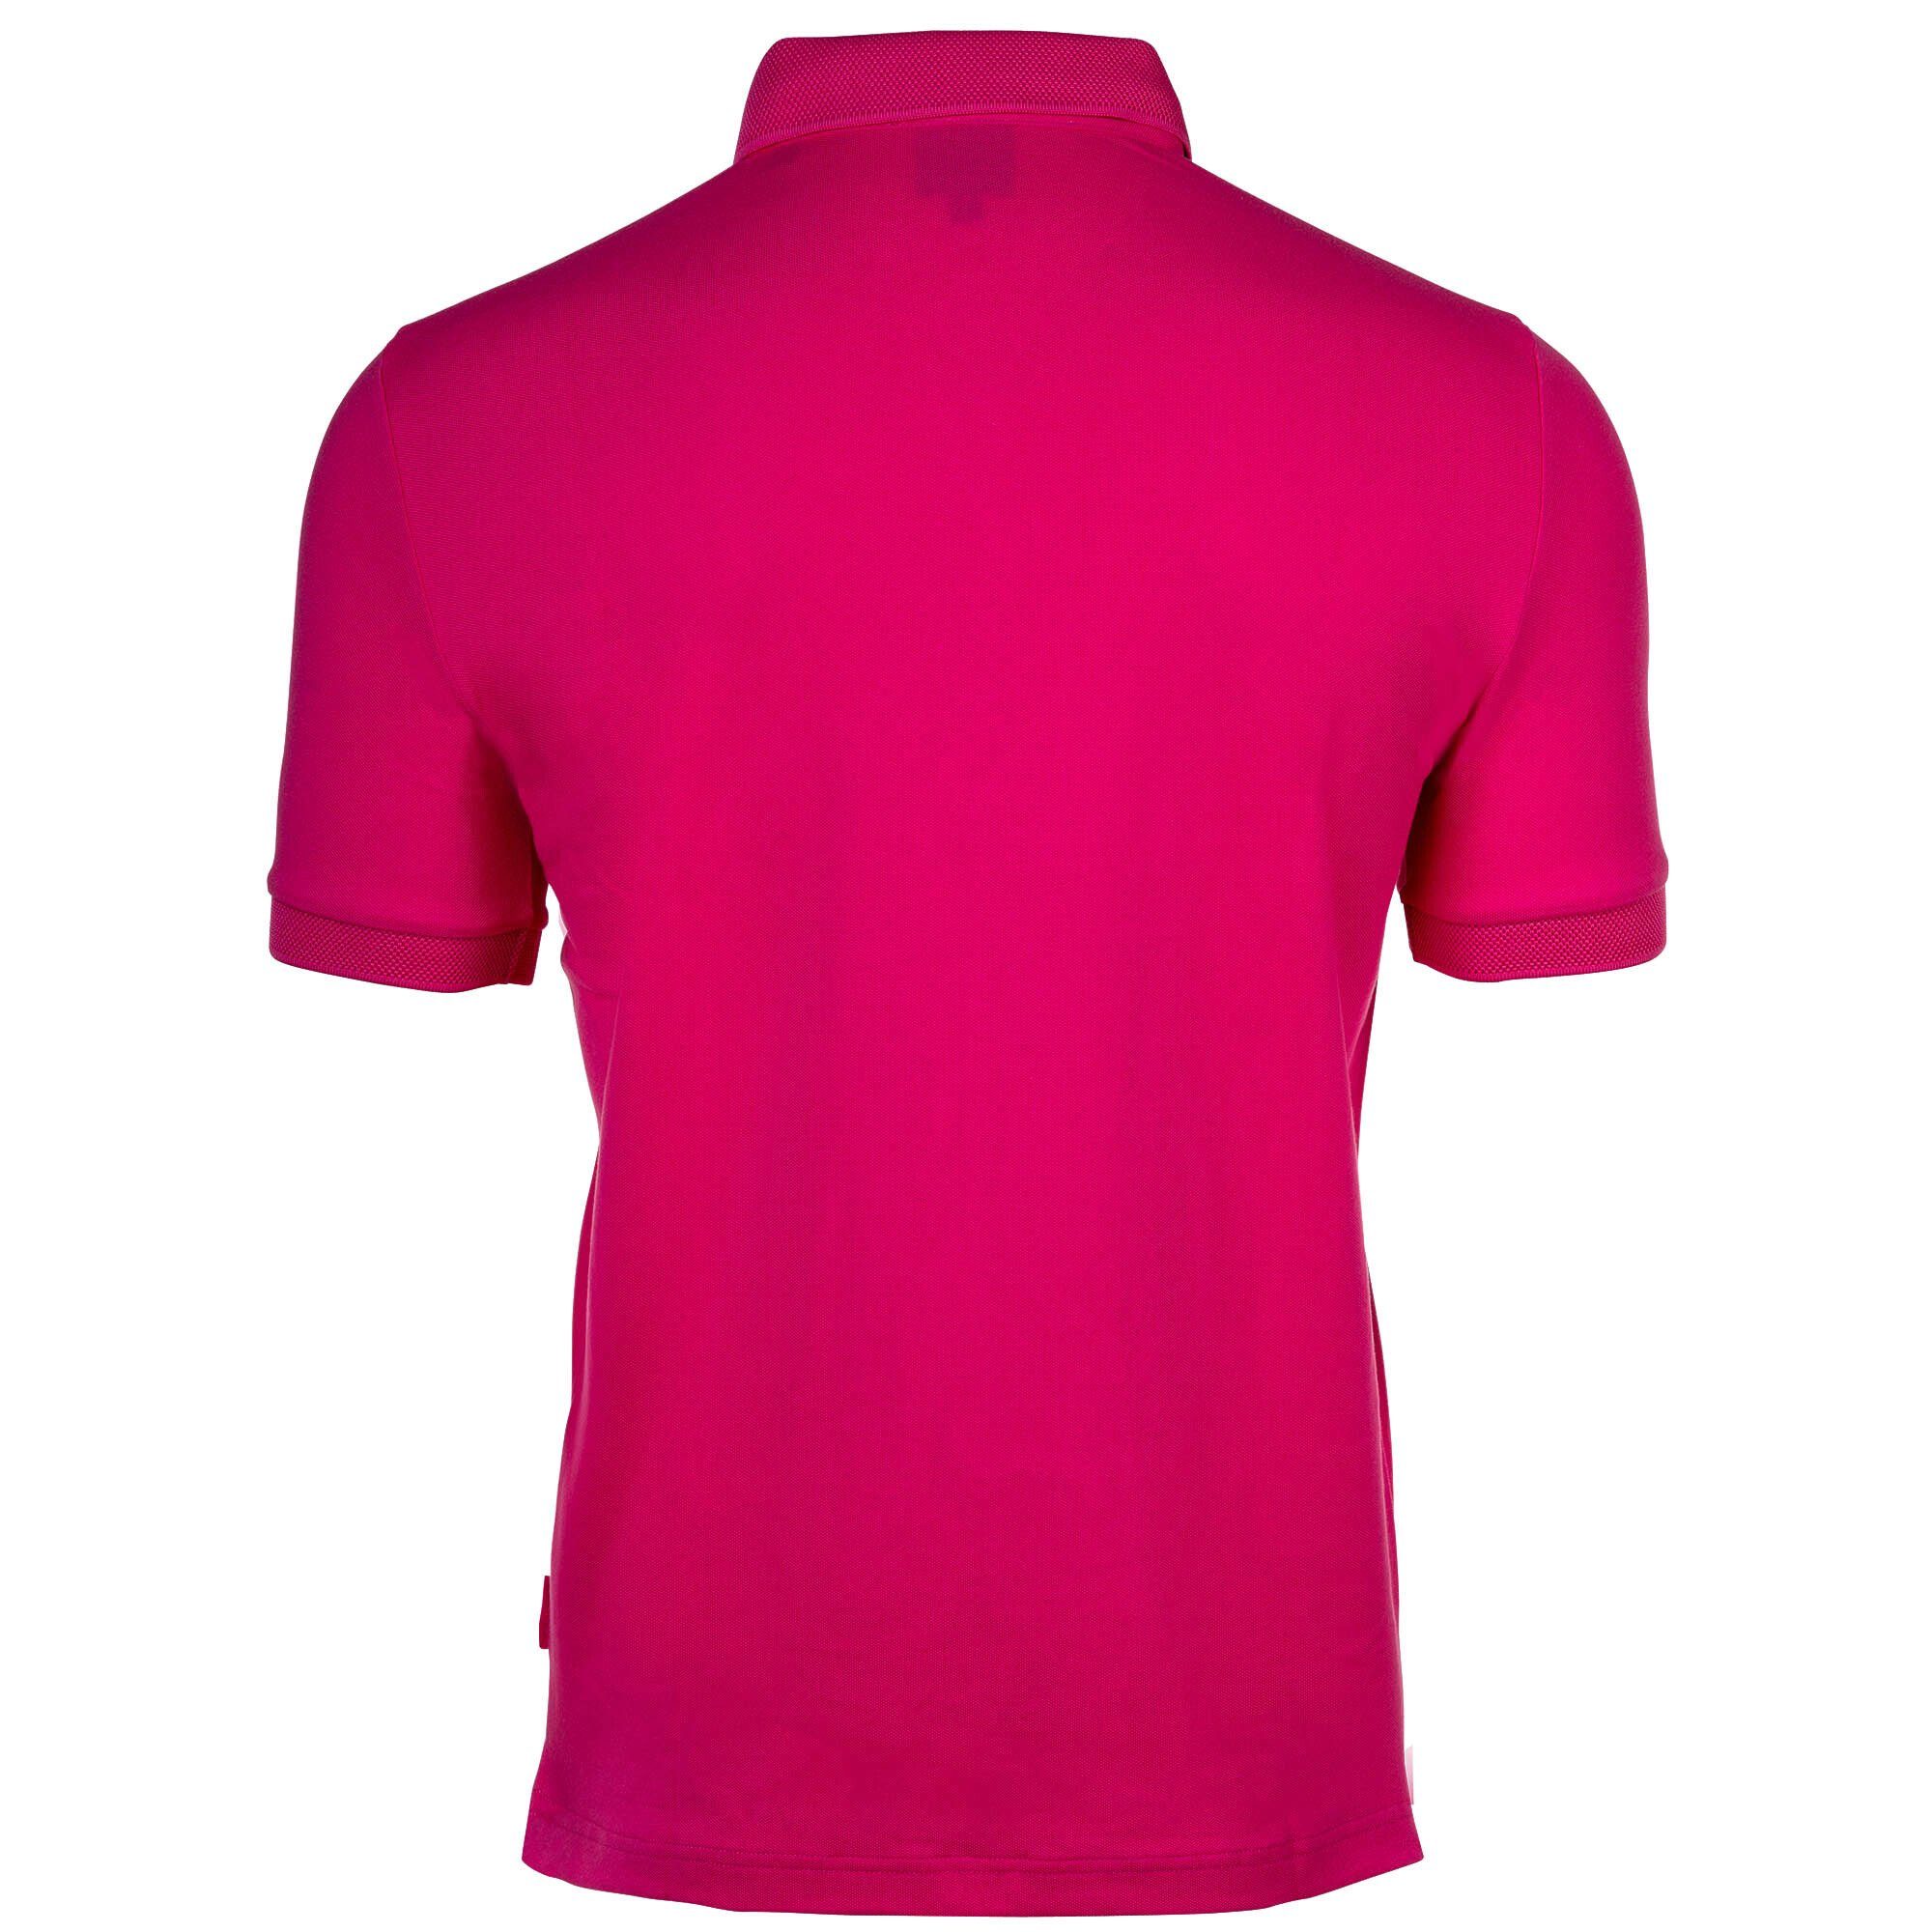 ARMANI EXCHANGE Poloshirt Herren Poloshirt Pink - fit, Cotton einfarbig, Slim